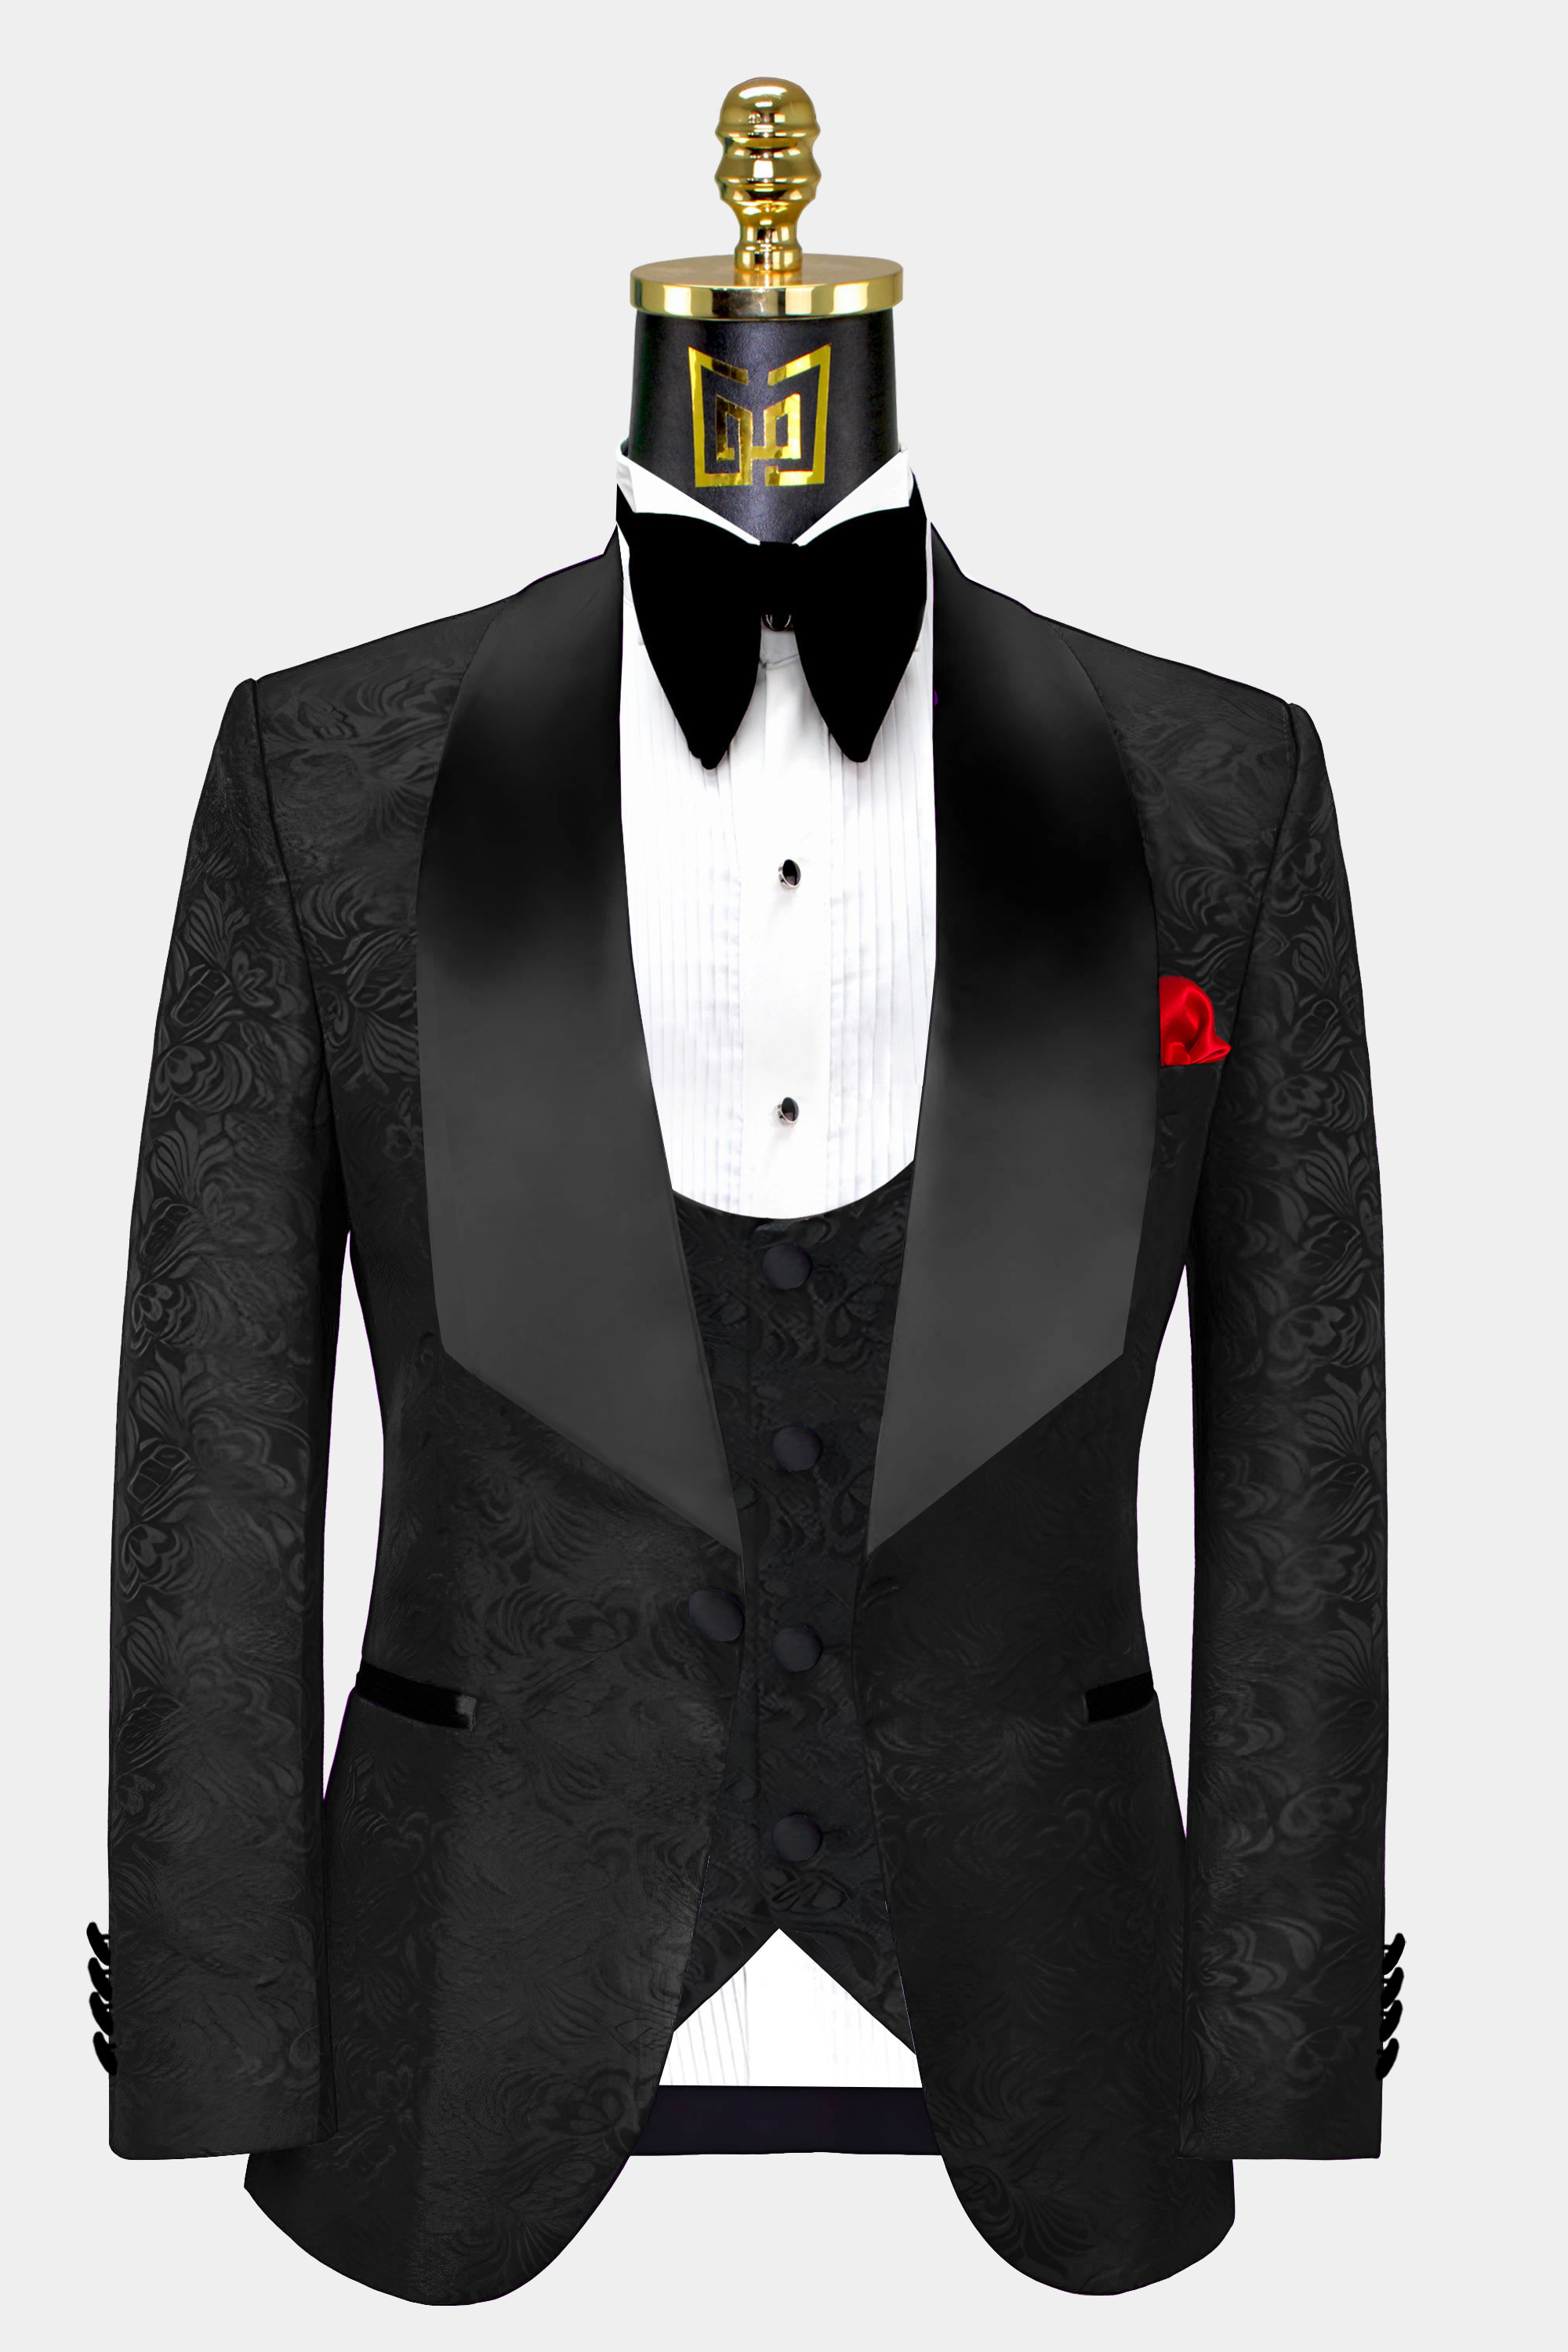 All-Black-Tuxedo-Jacket-Groom-Wedding-Floral-Blazer-from-Gentlemansguru.com